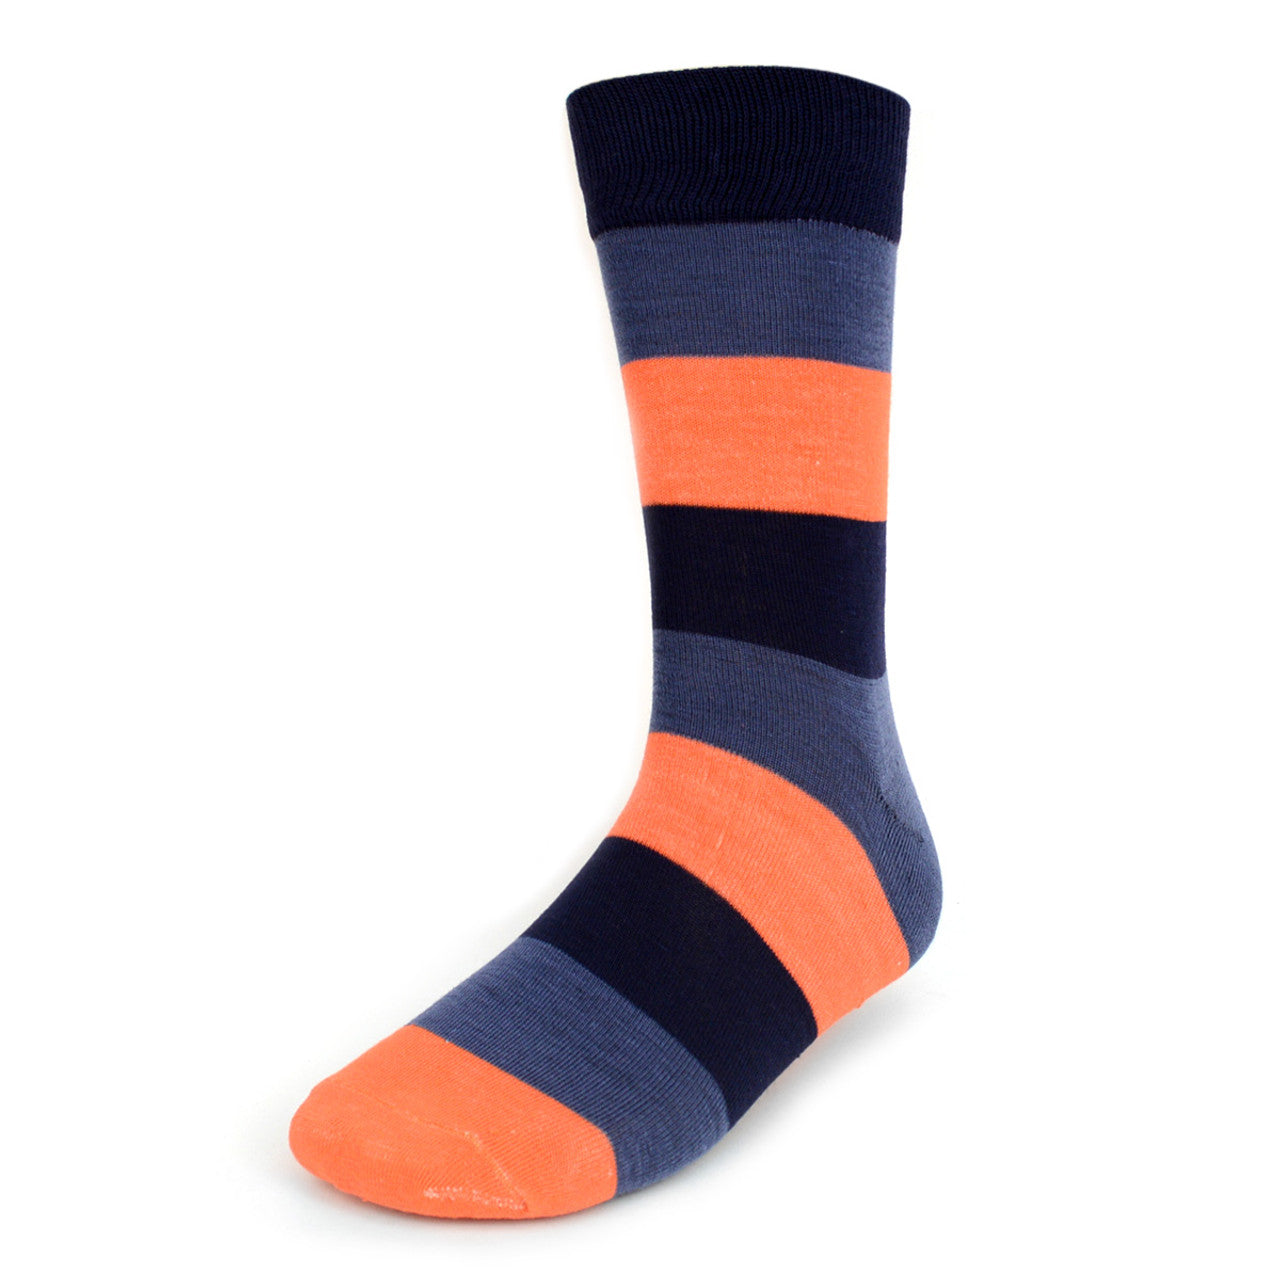 Men's Striped and Dot Crew Socks - Blue and Orange